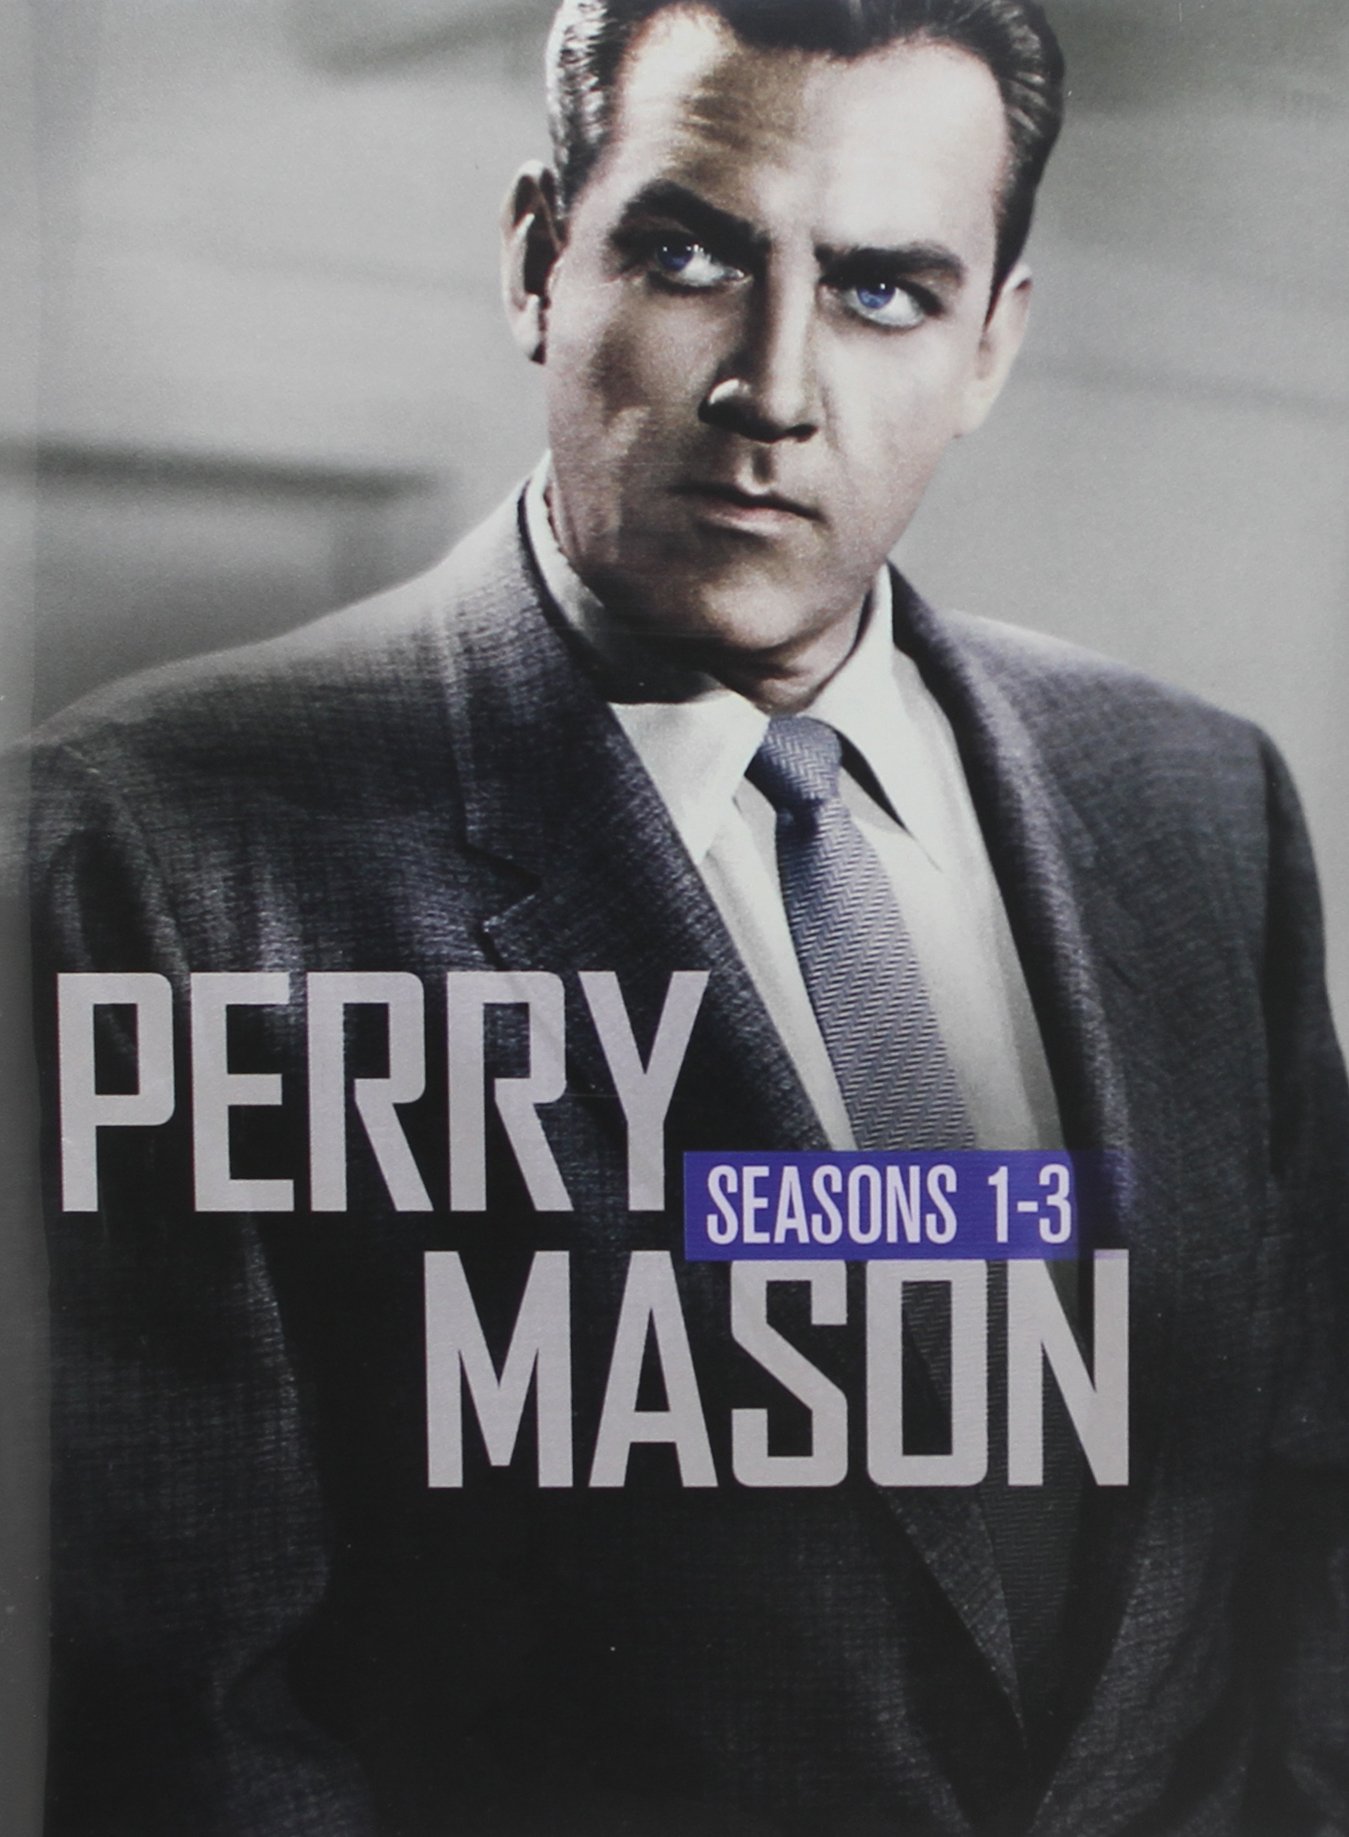 PERRY MASON MINI: SEASON 1-3 - PERRY MASON MINI: SEASON 1-3 (1 DVD)